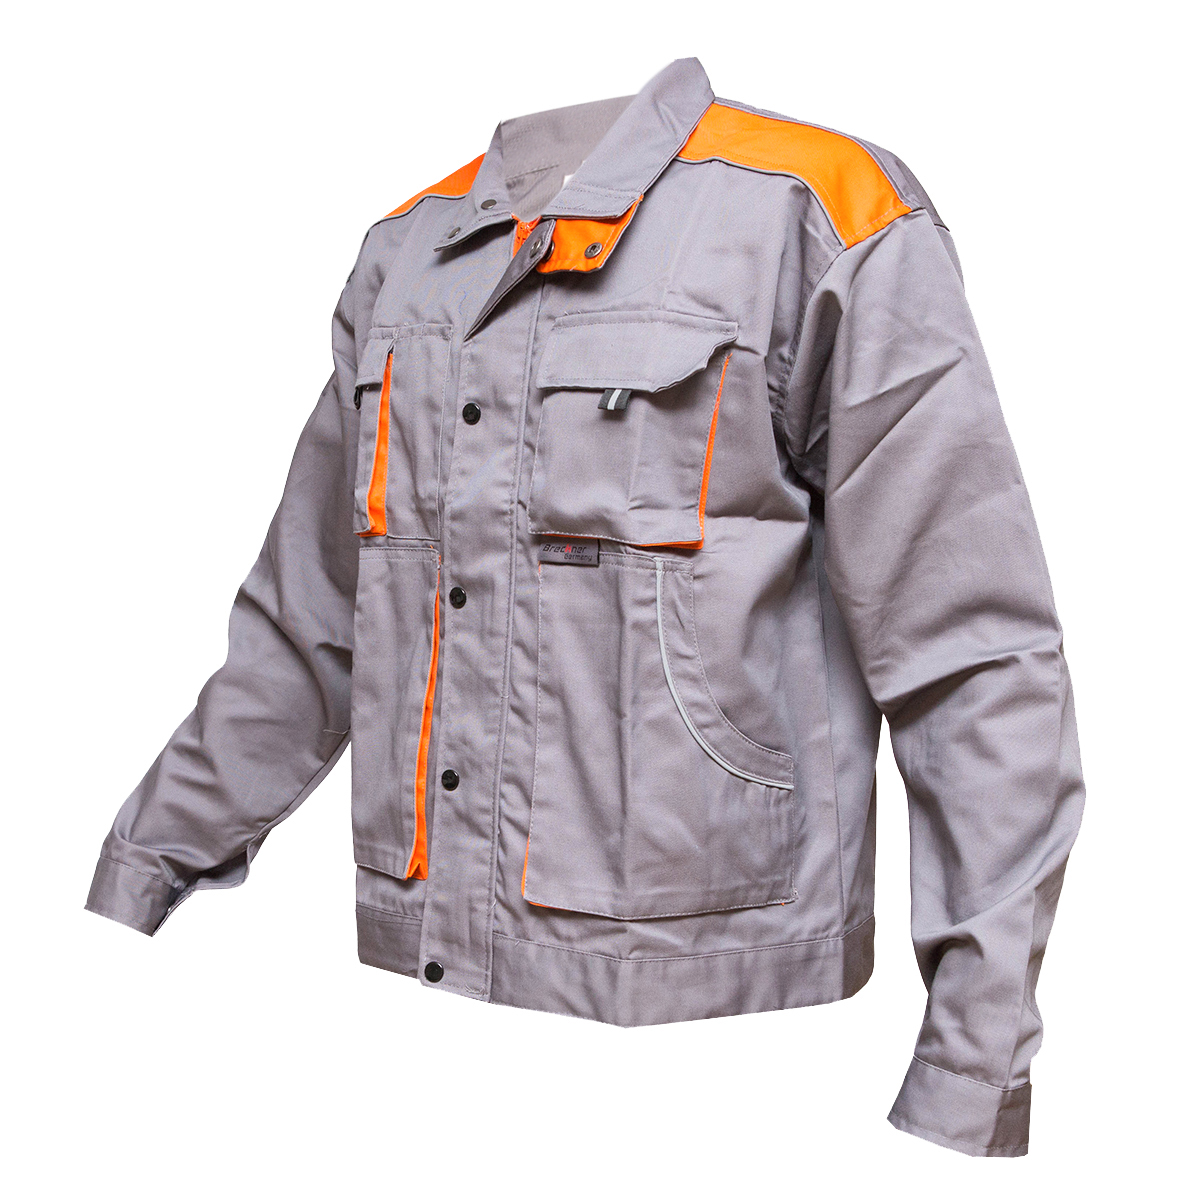 Jacheta de lucru poliester cu bumbac, gri/portocaliu marimea 60, 235g/m2 Breckner Germany